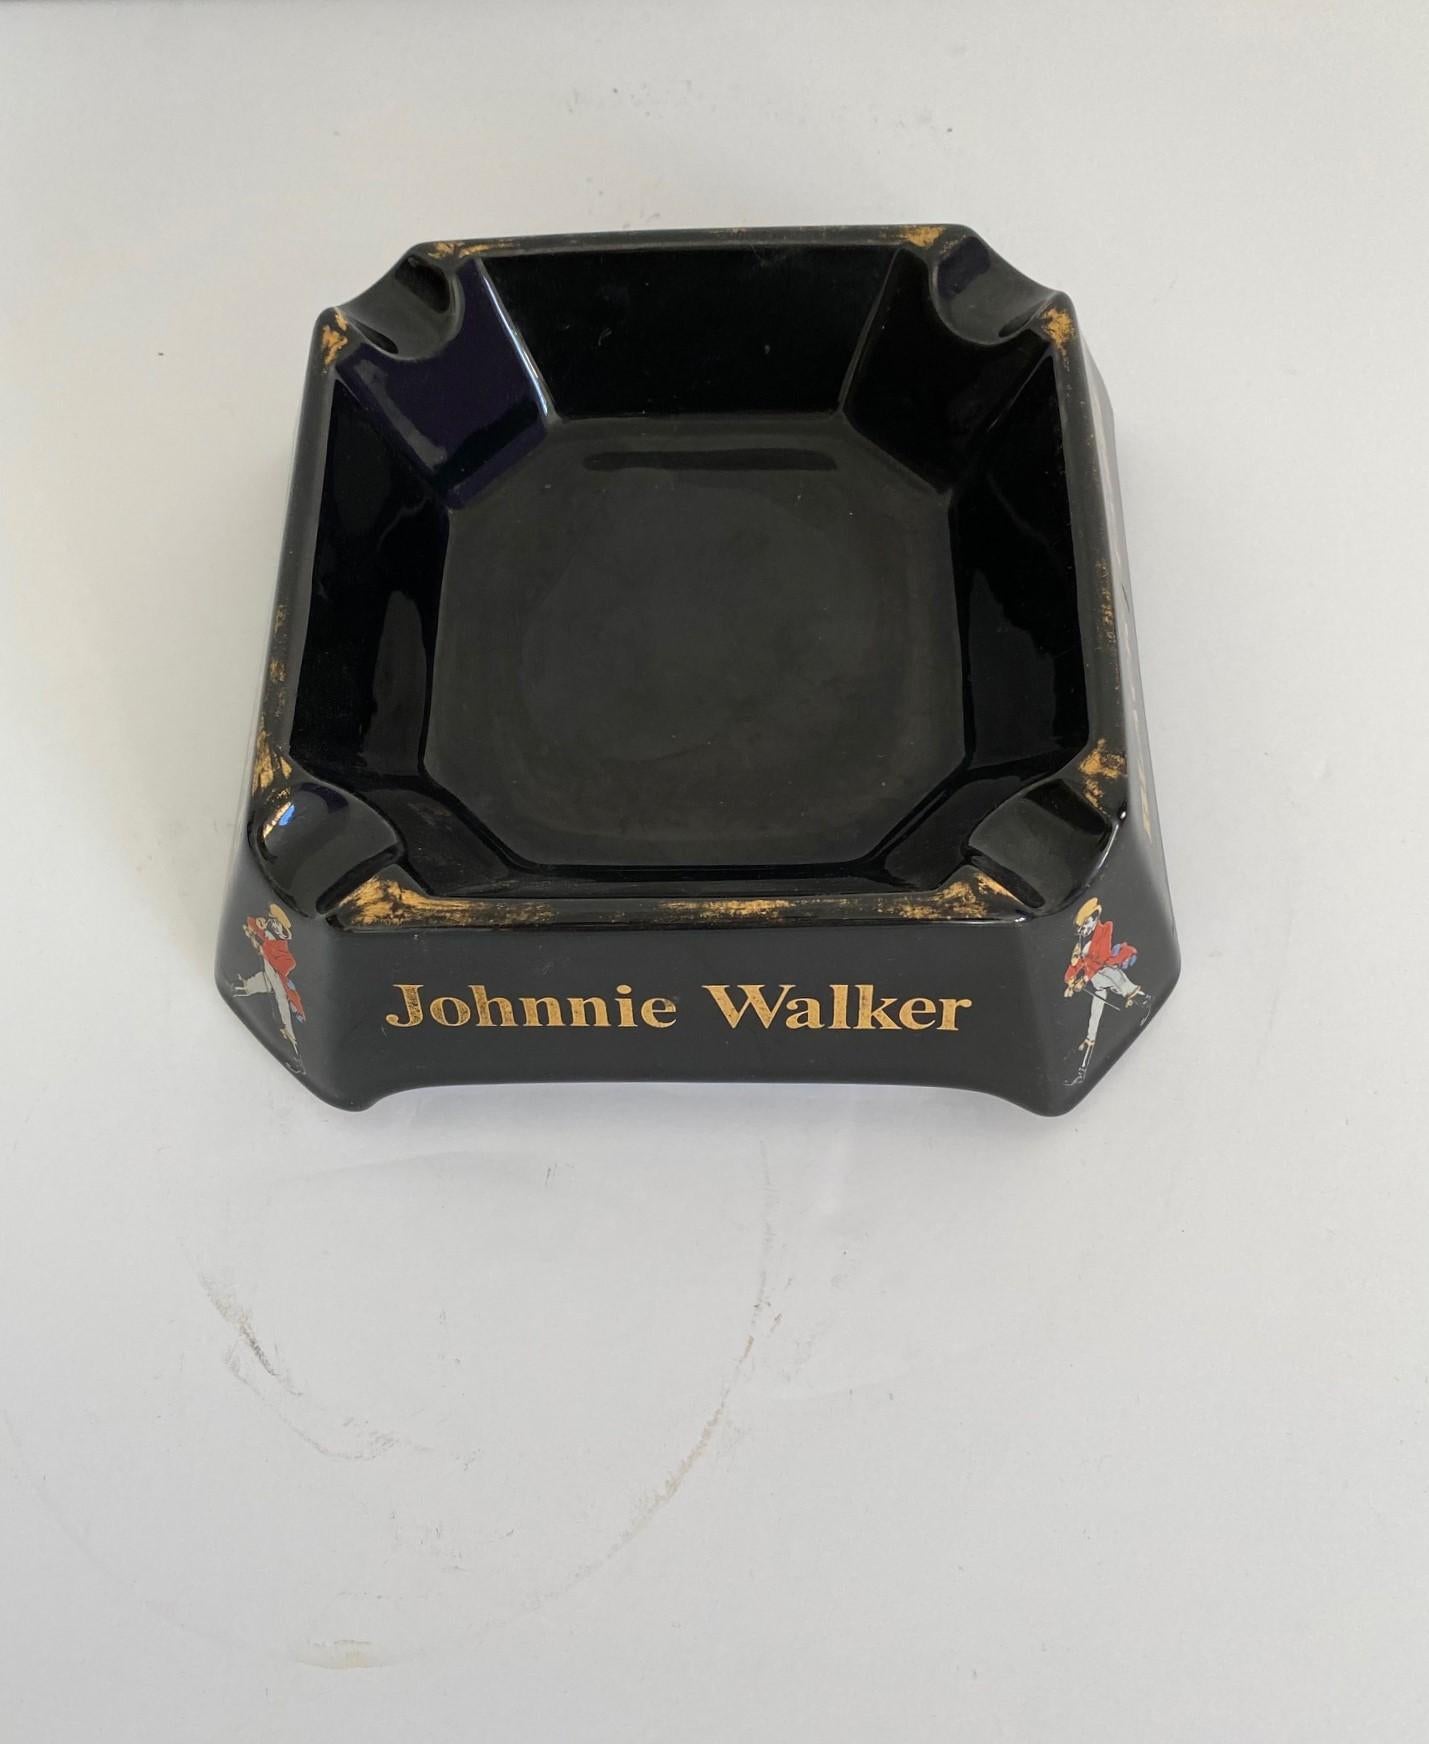 Vintage Johnnie Walker ashtray. Circa 1960's.